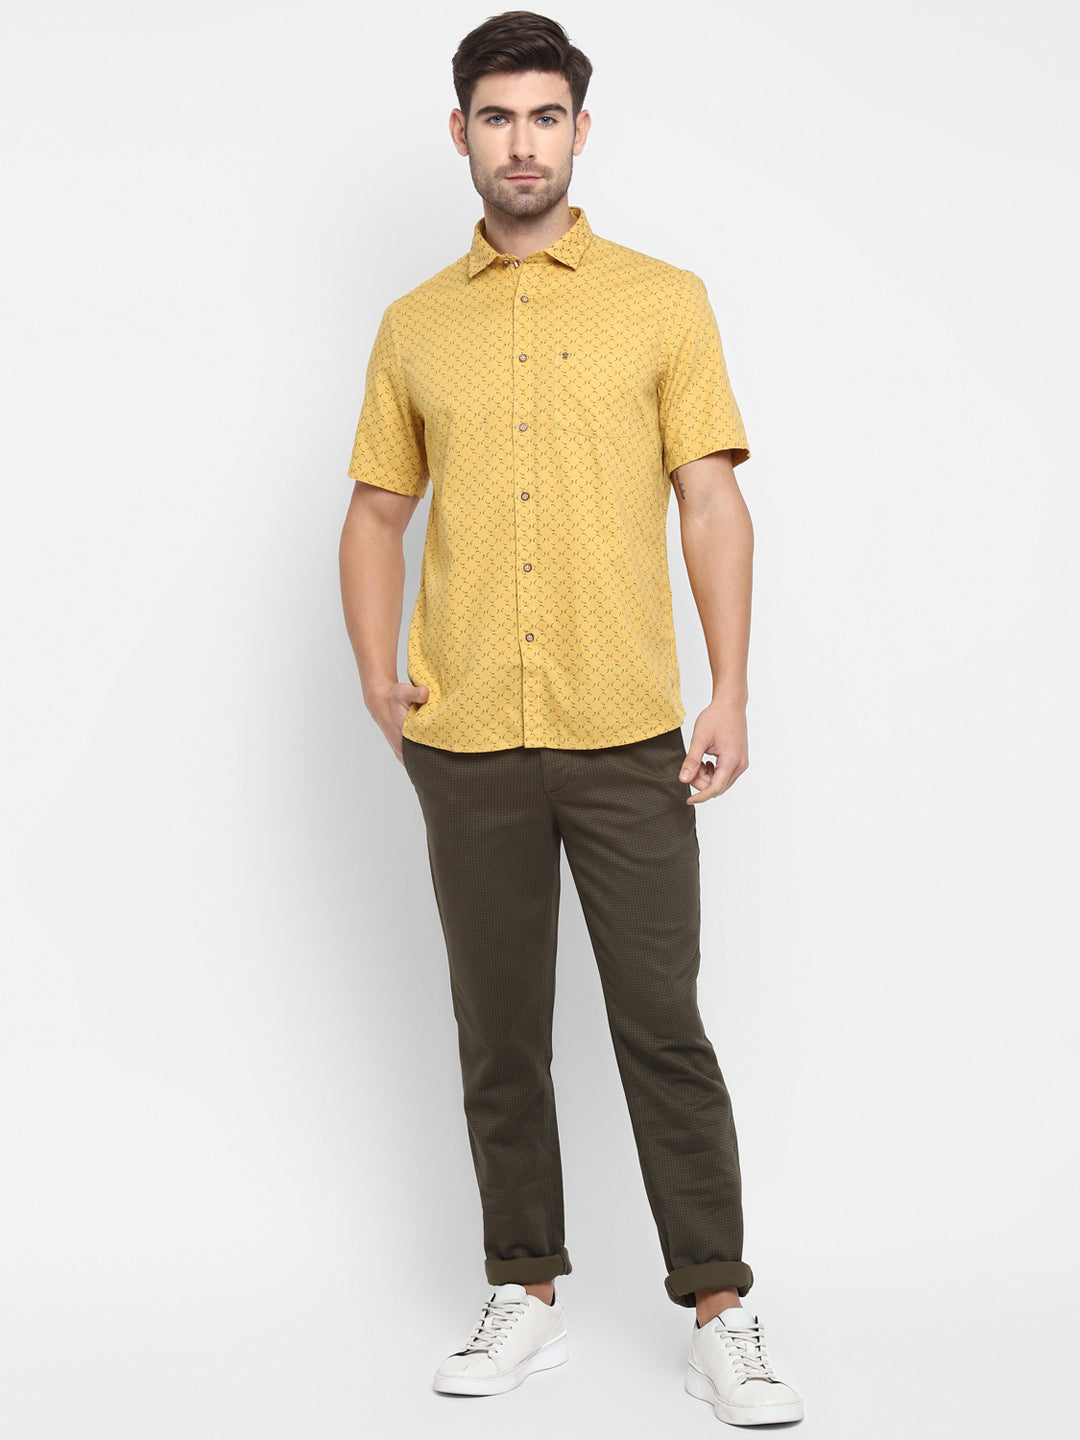 Printed Yellow Slim Fit Casual Shirt